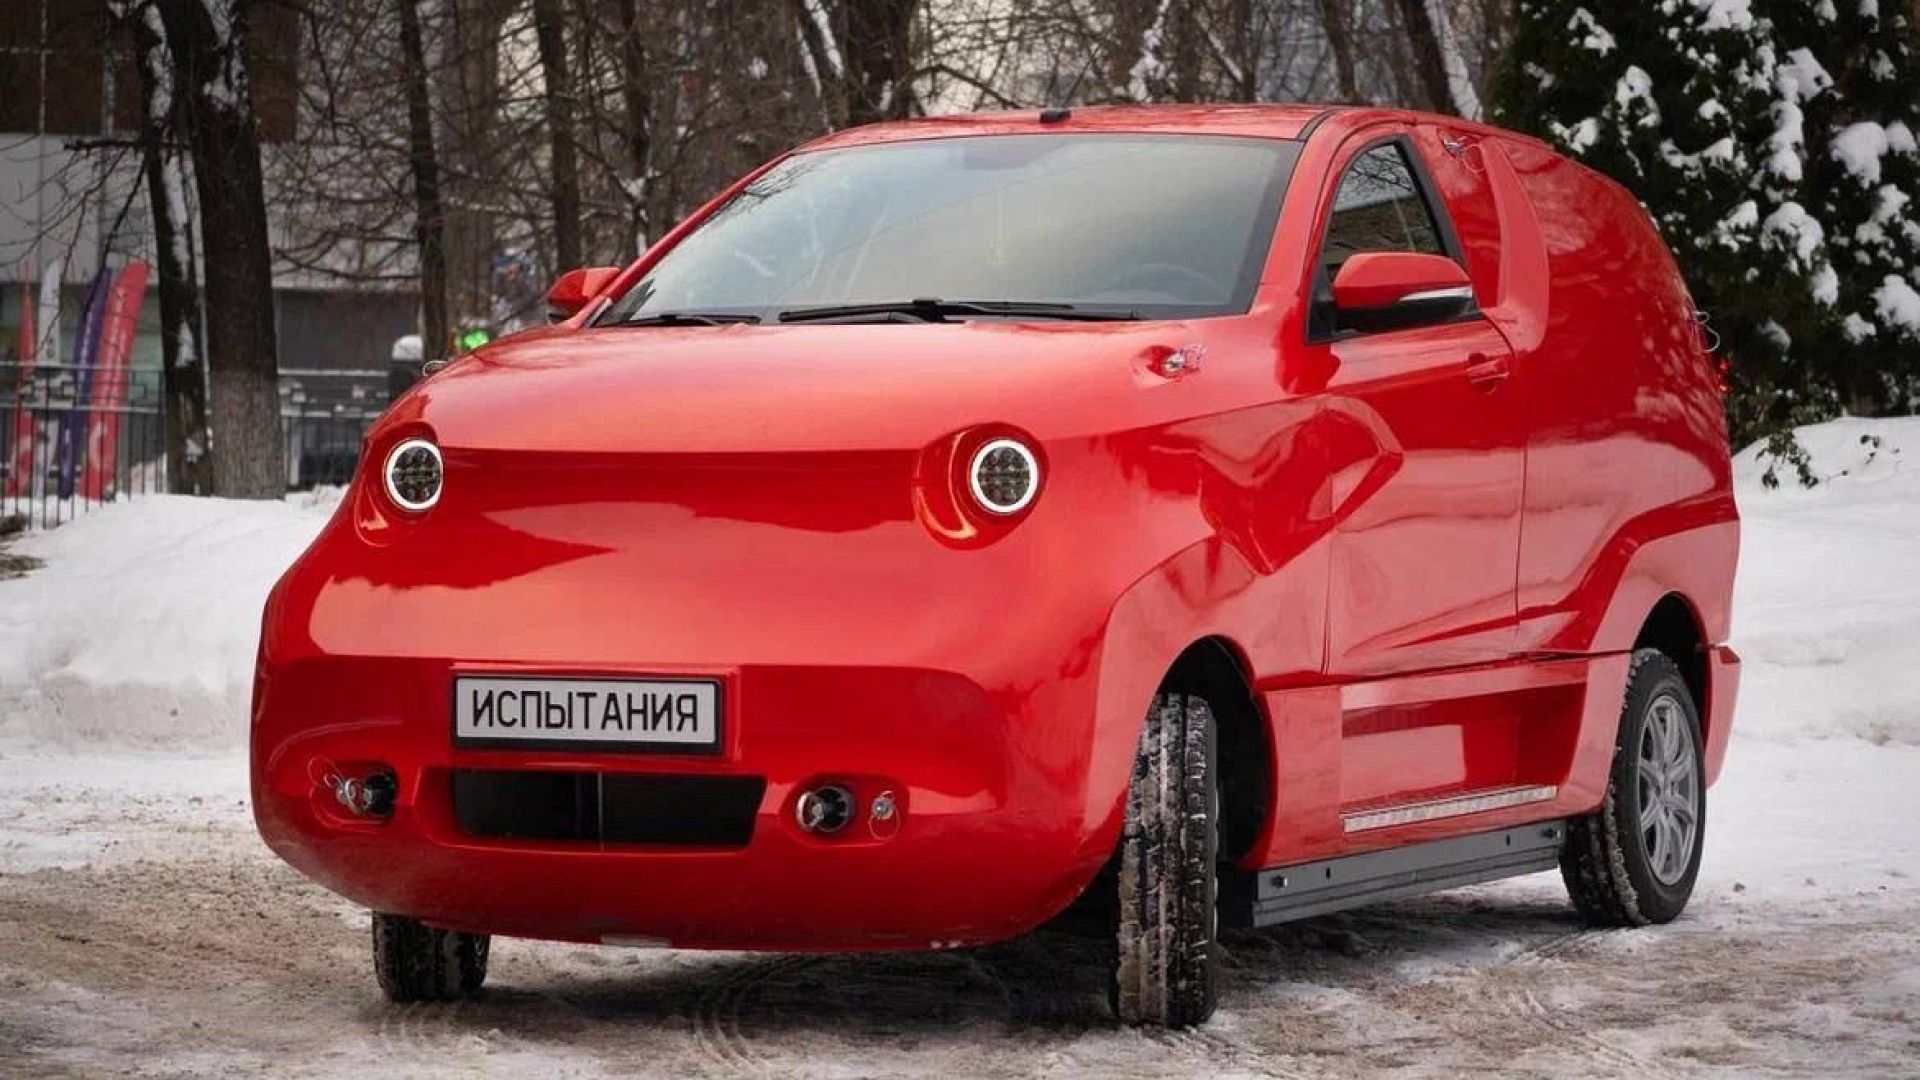 'Tesla katili': Rusya’nın ilk elektrikli otomobili sosyal medyada alay konusu oldu